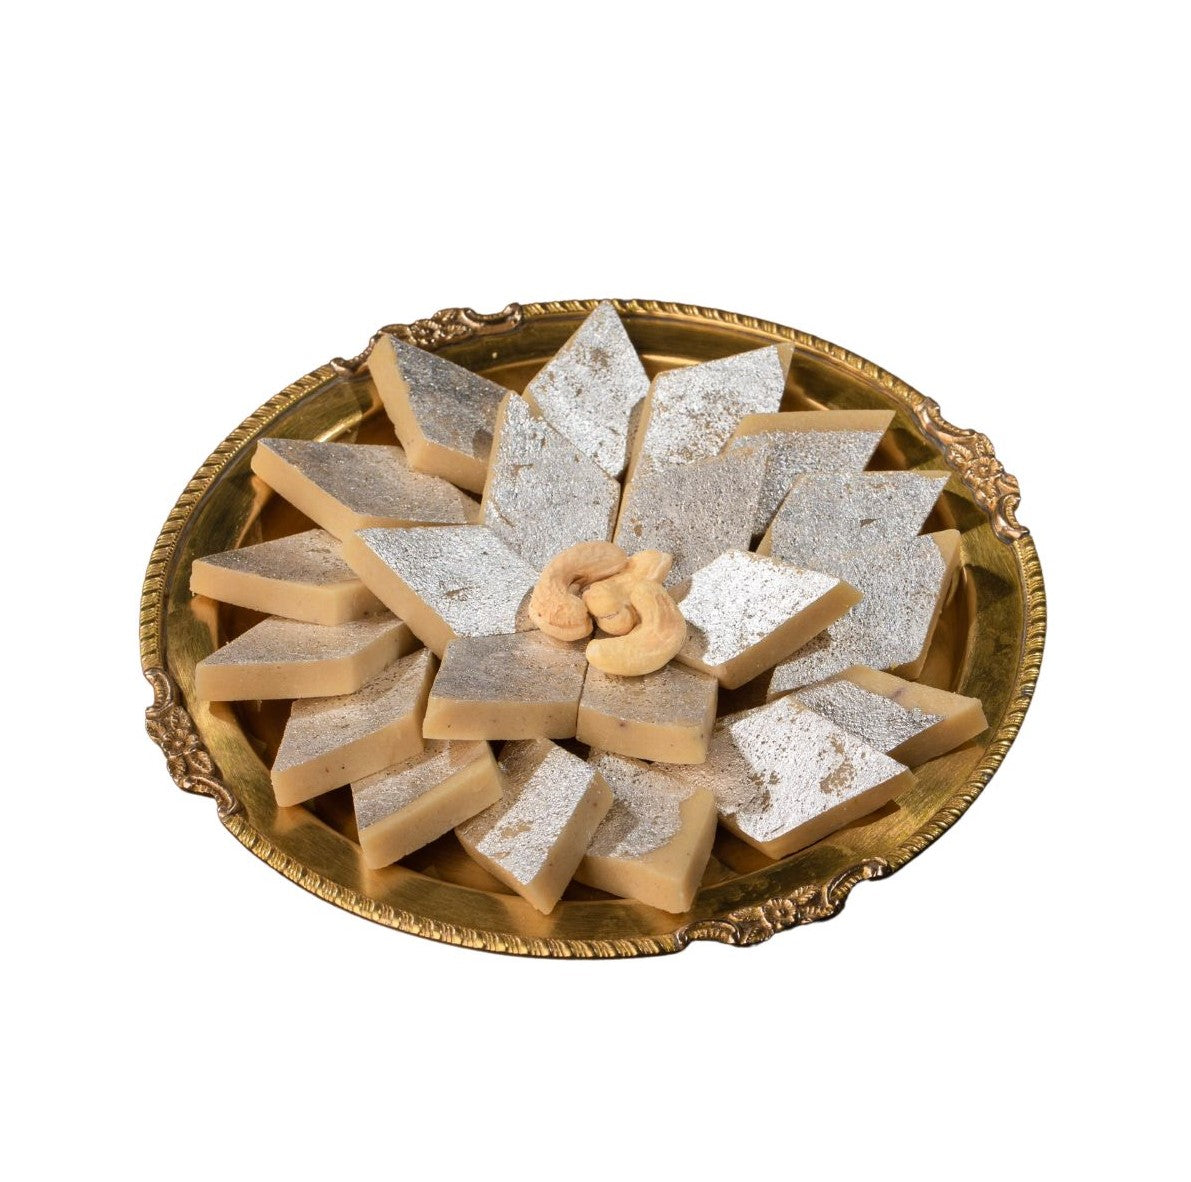 Image of Kaju Katli , made of Cashew and Sugar